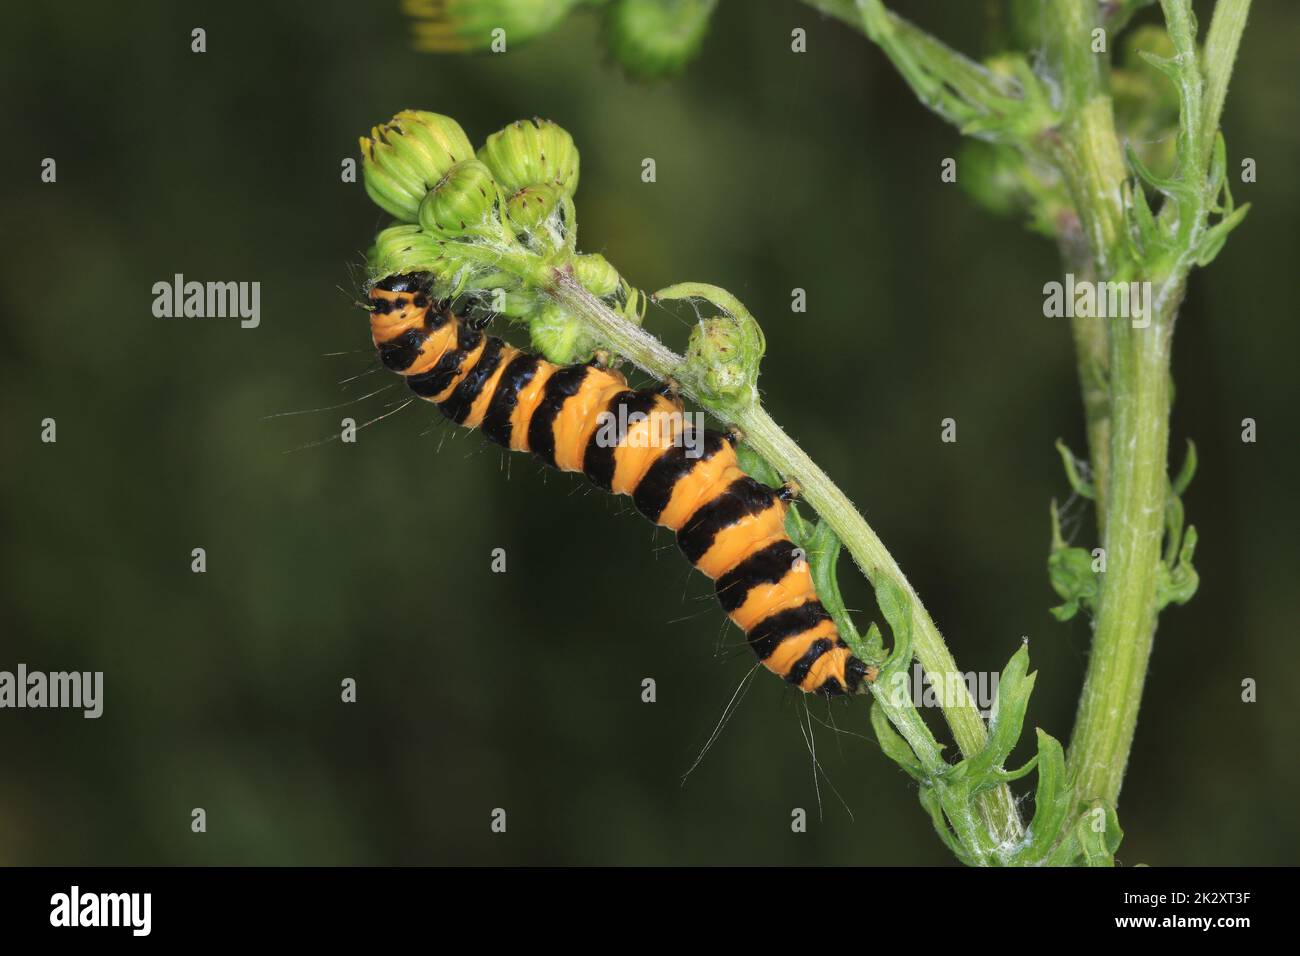 Jakobskrautbär, Tyria jacobaeae, Raupe an Greiskraut fressend. Cinnabar moth,  Tyria jacobaeae, caterpillar feeding on ragwort. Stock Photo